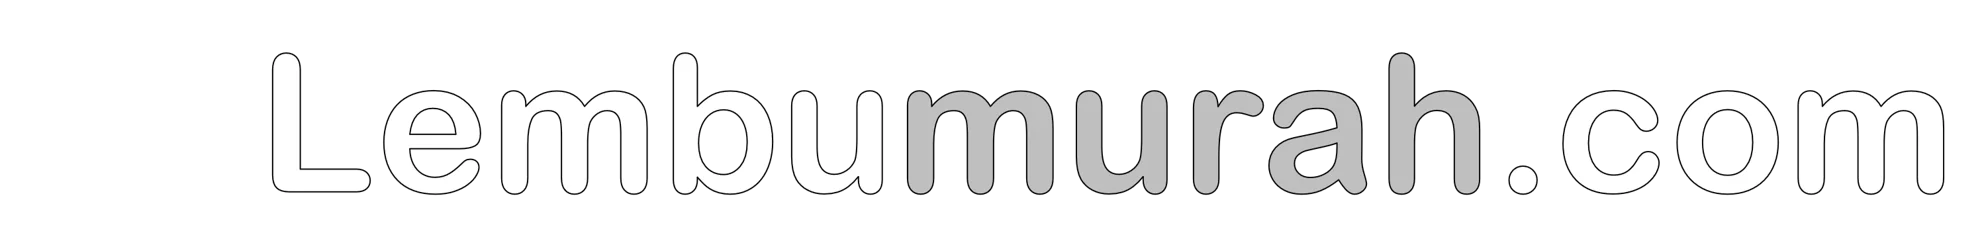 lembumurah.com logo greyscaled